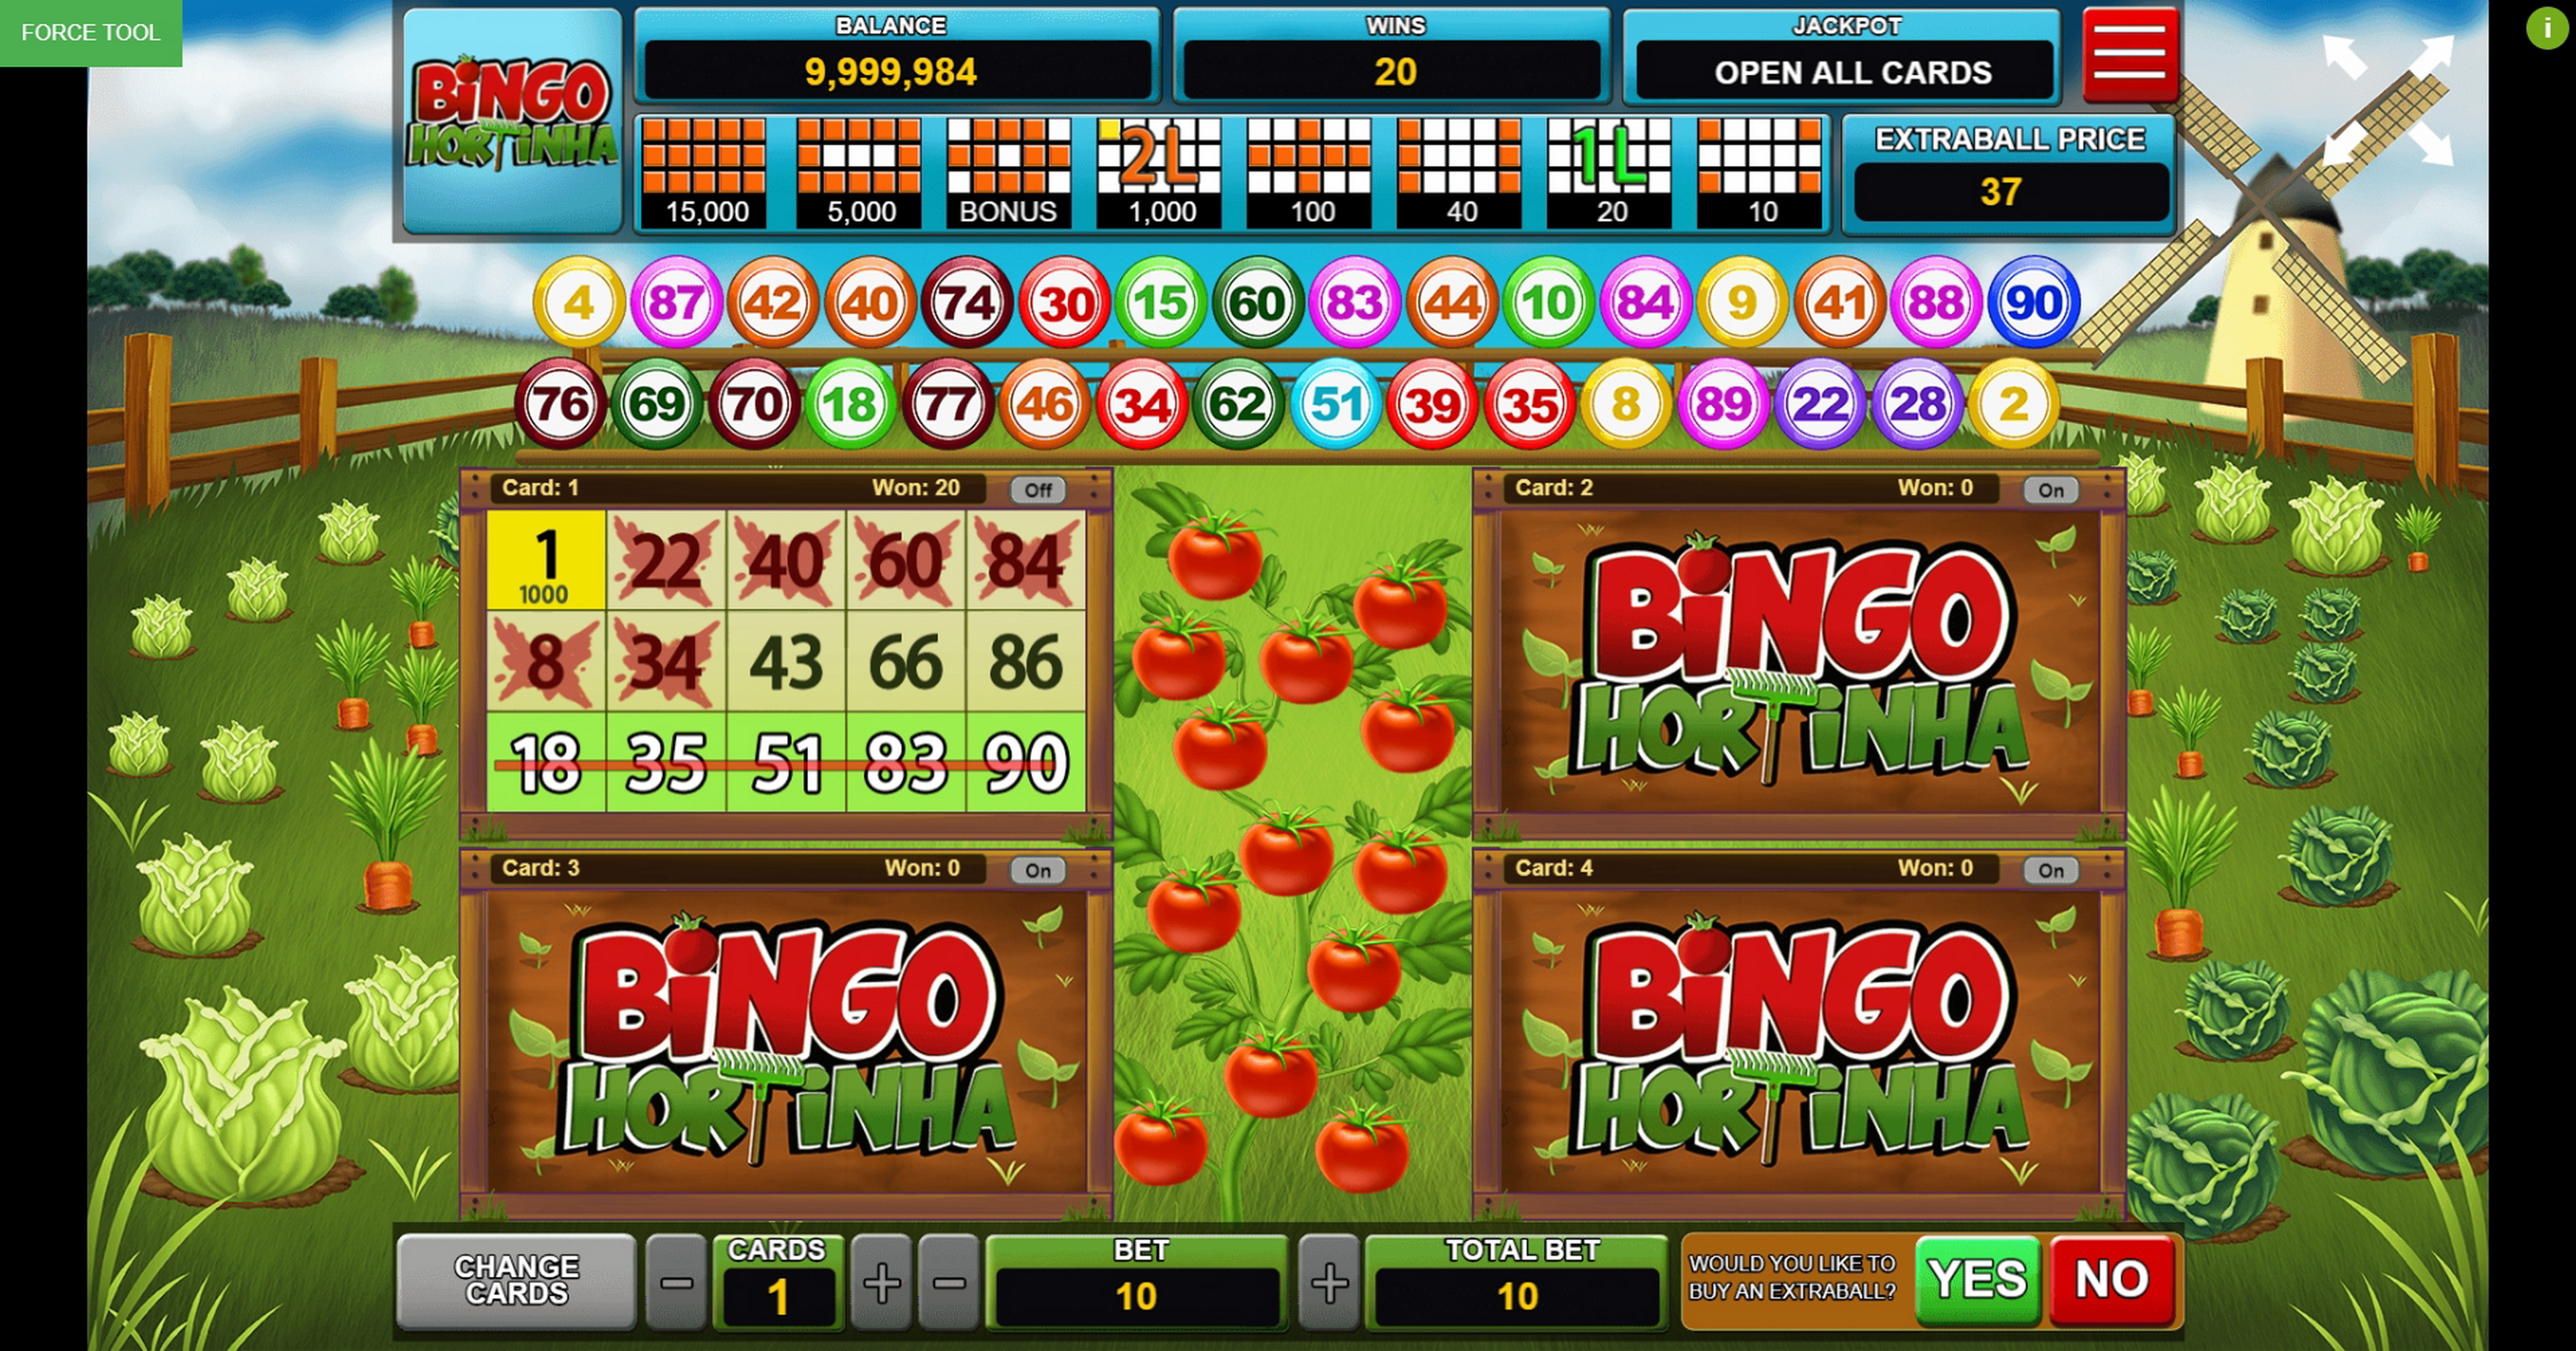 Win Money in Bingo Hortinha Free Slot Game by Caleta Gaming